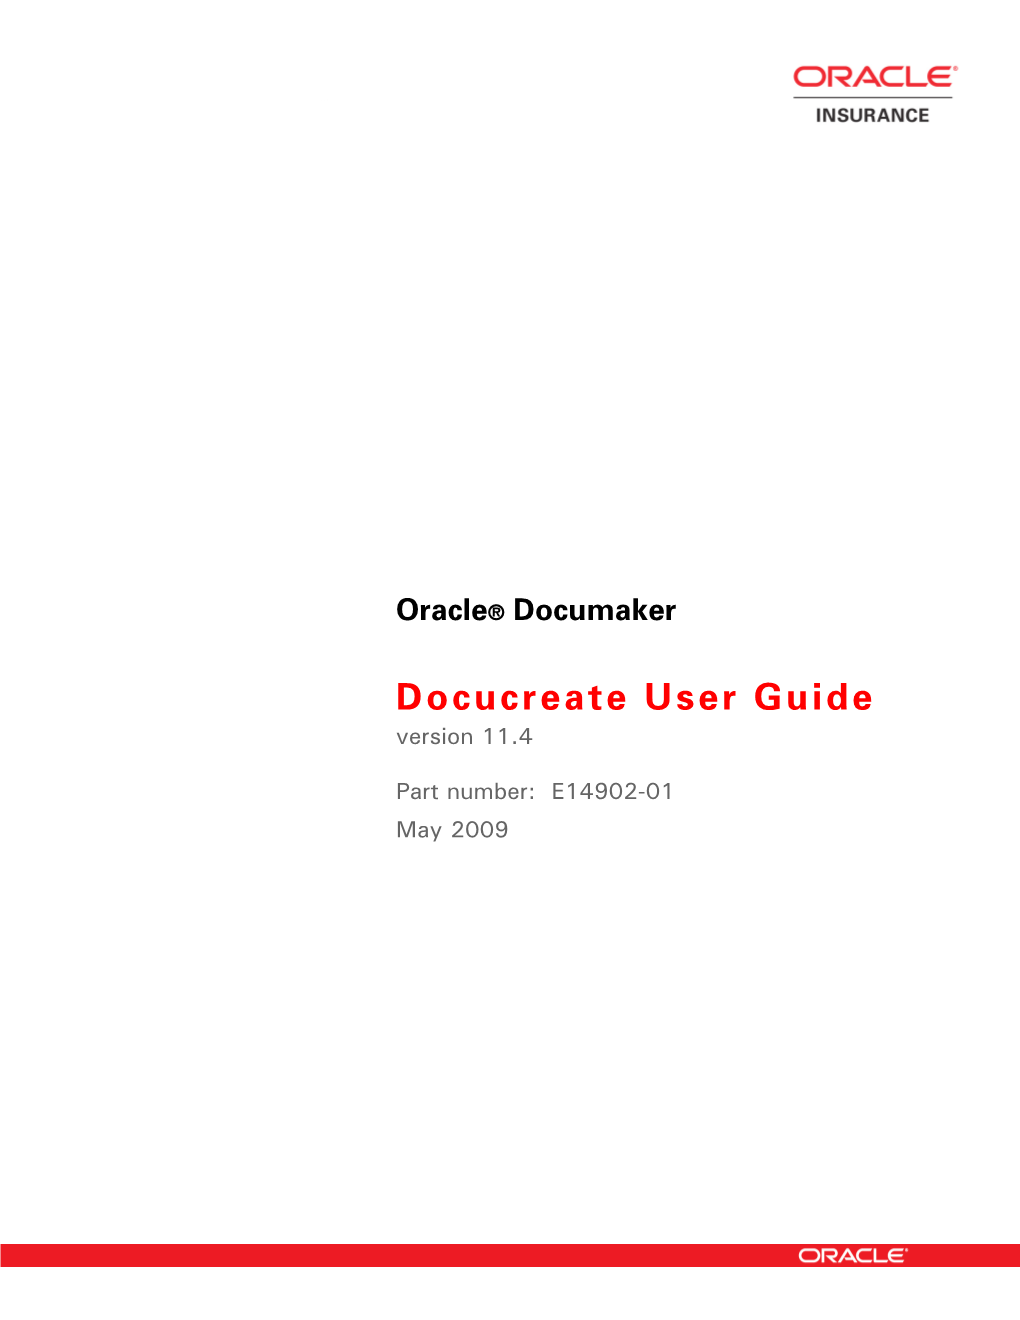 Docucreate User Guide, Version 11.4